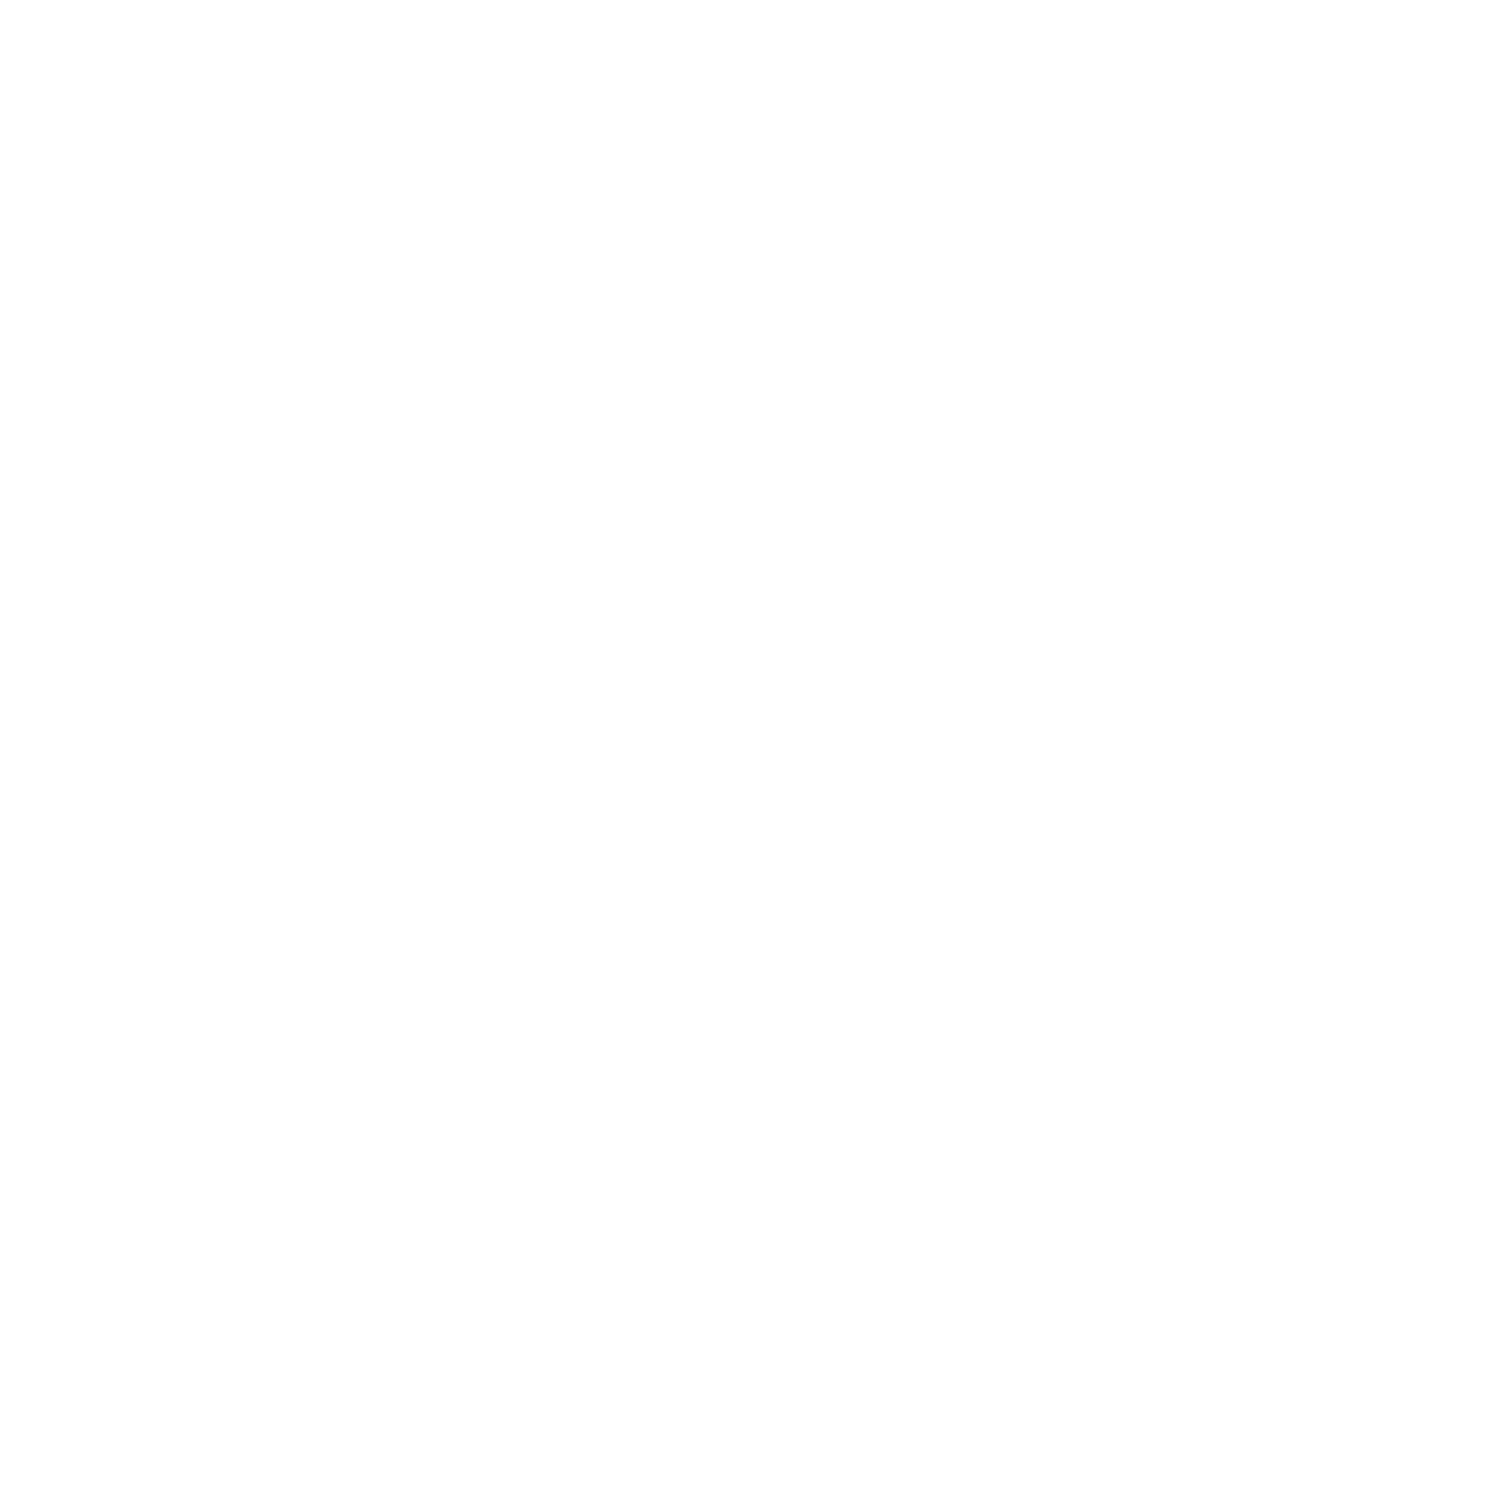 Ballina RSL